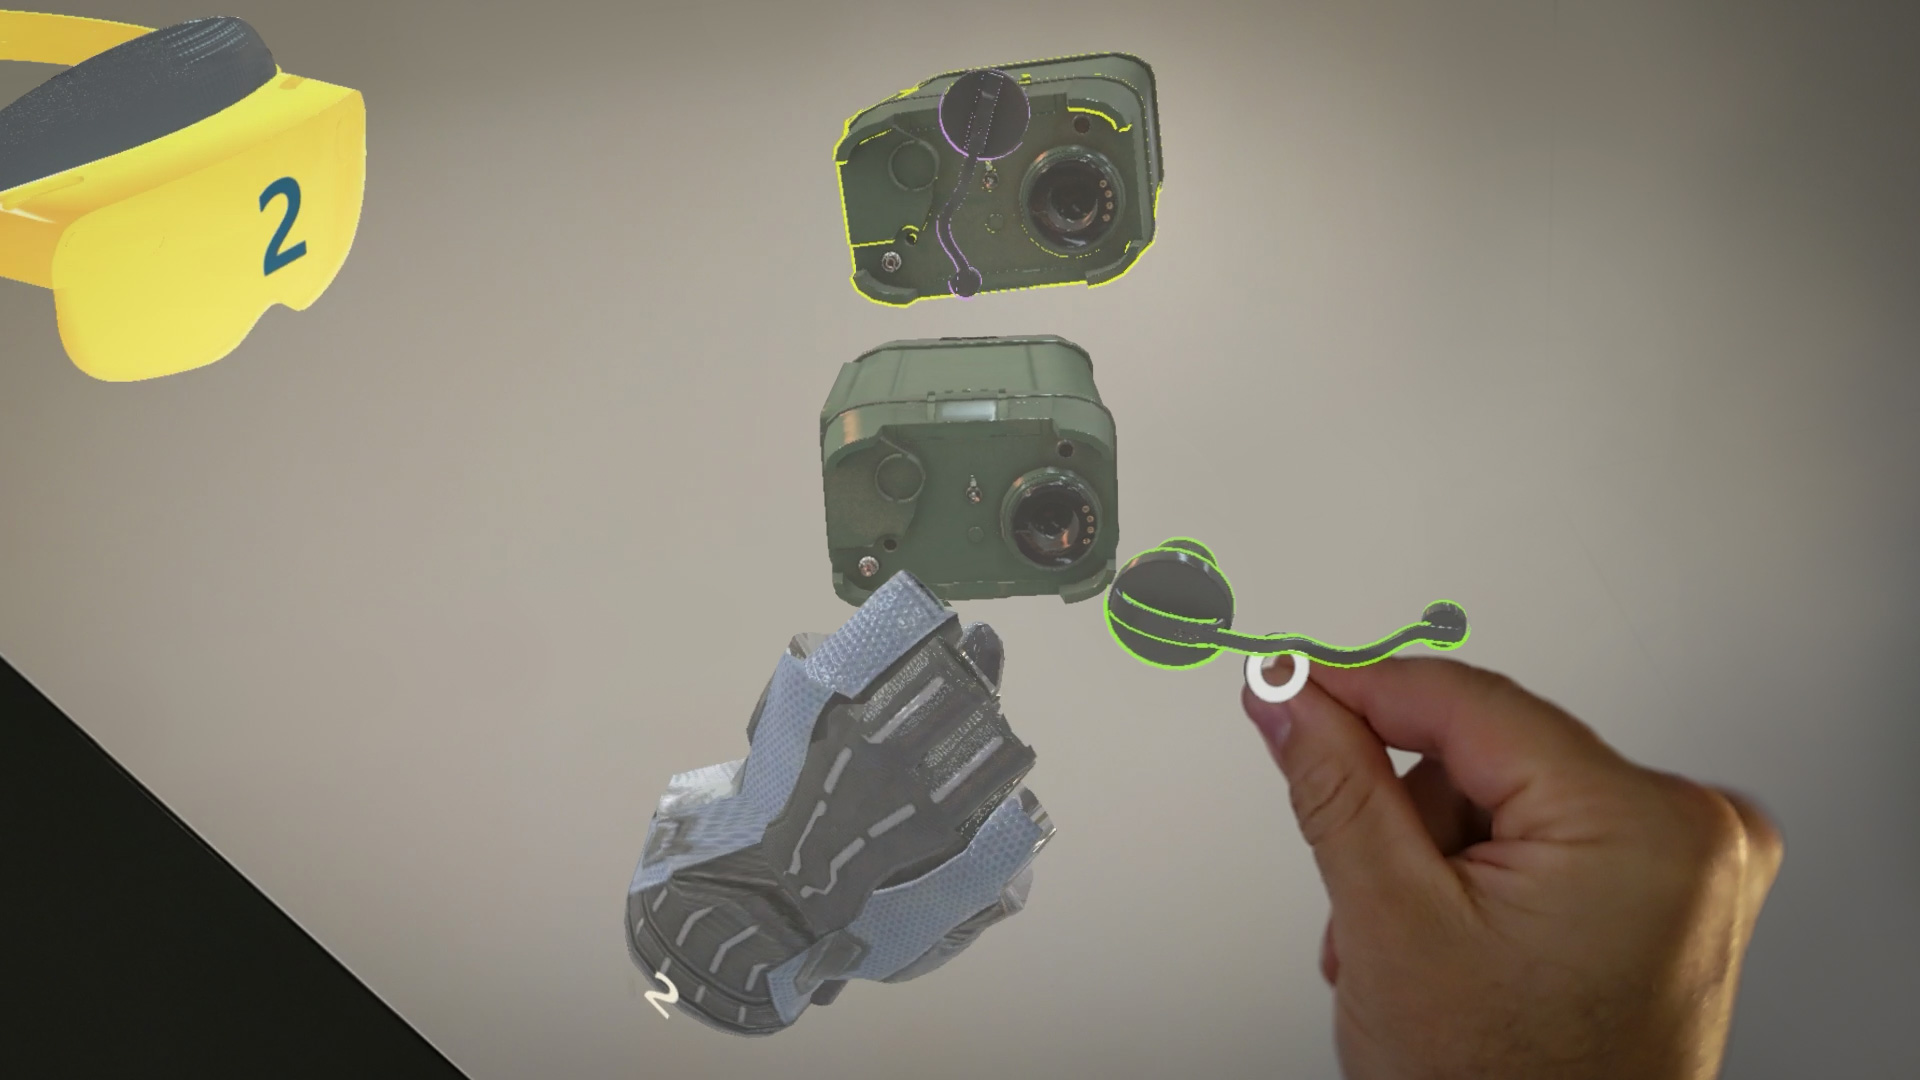 Multiuser-Augmented-Reality-Training-Simulator